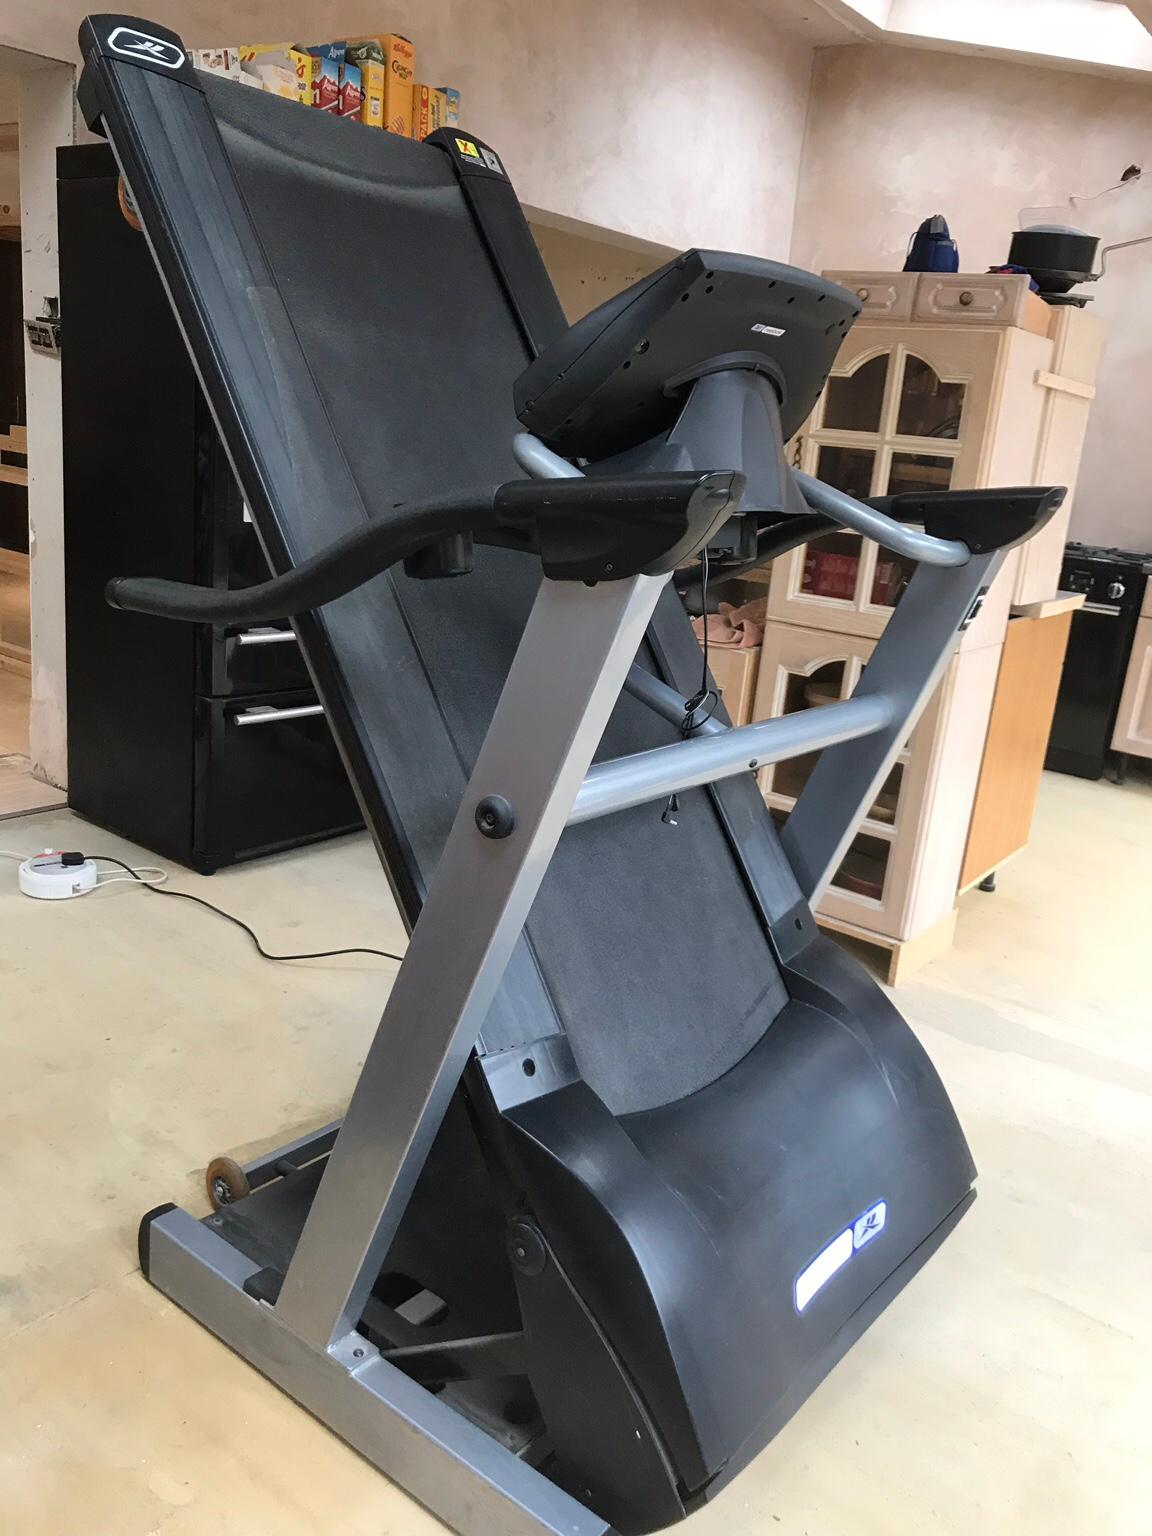 reebok tr3 powerrun treadmill